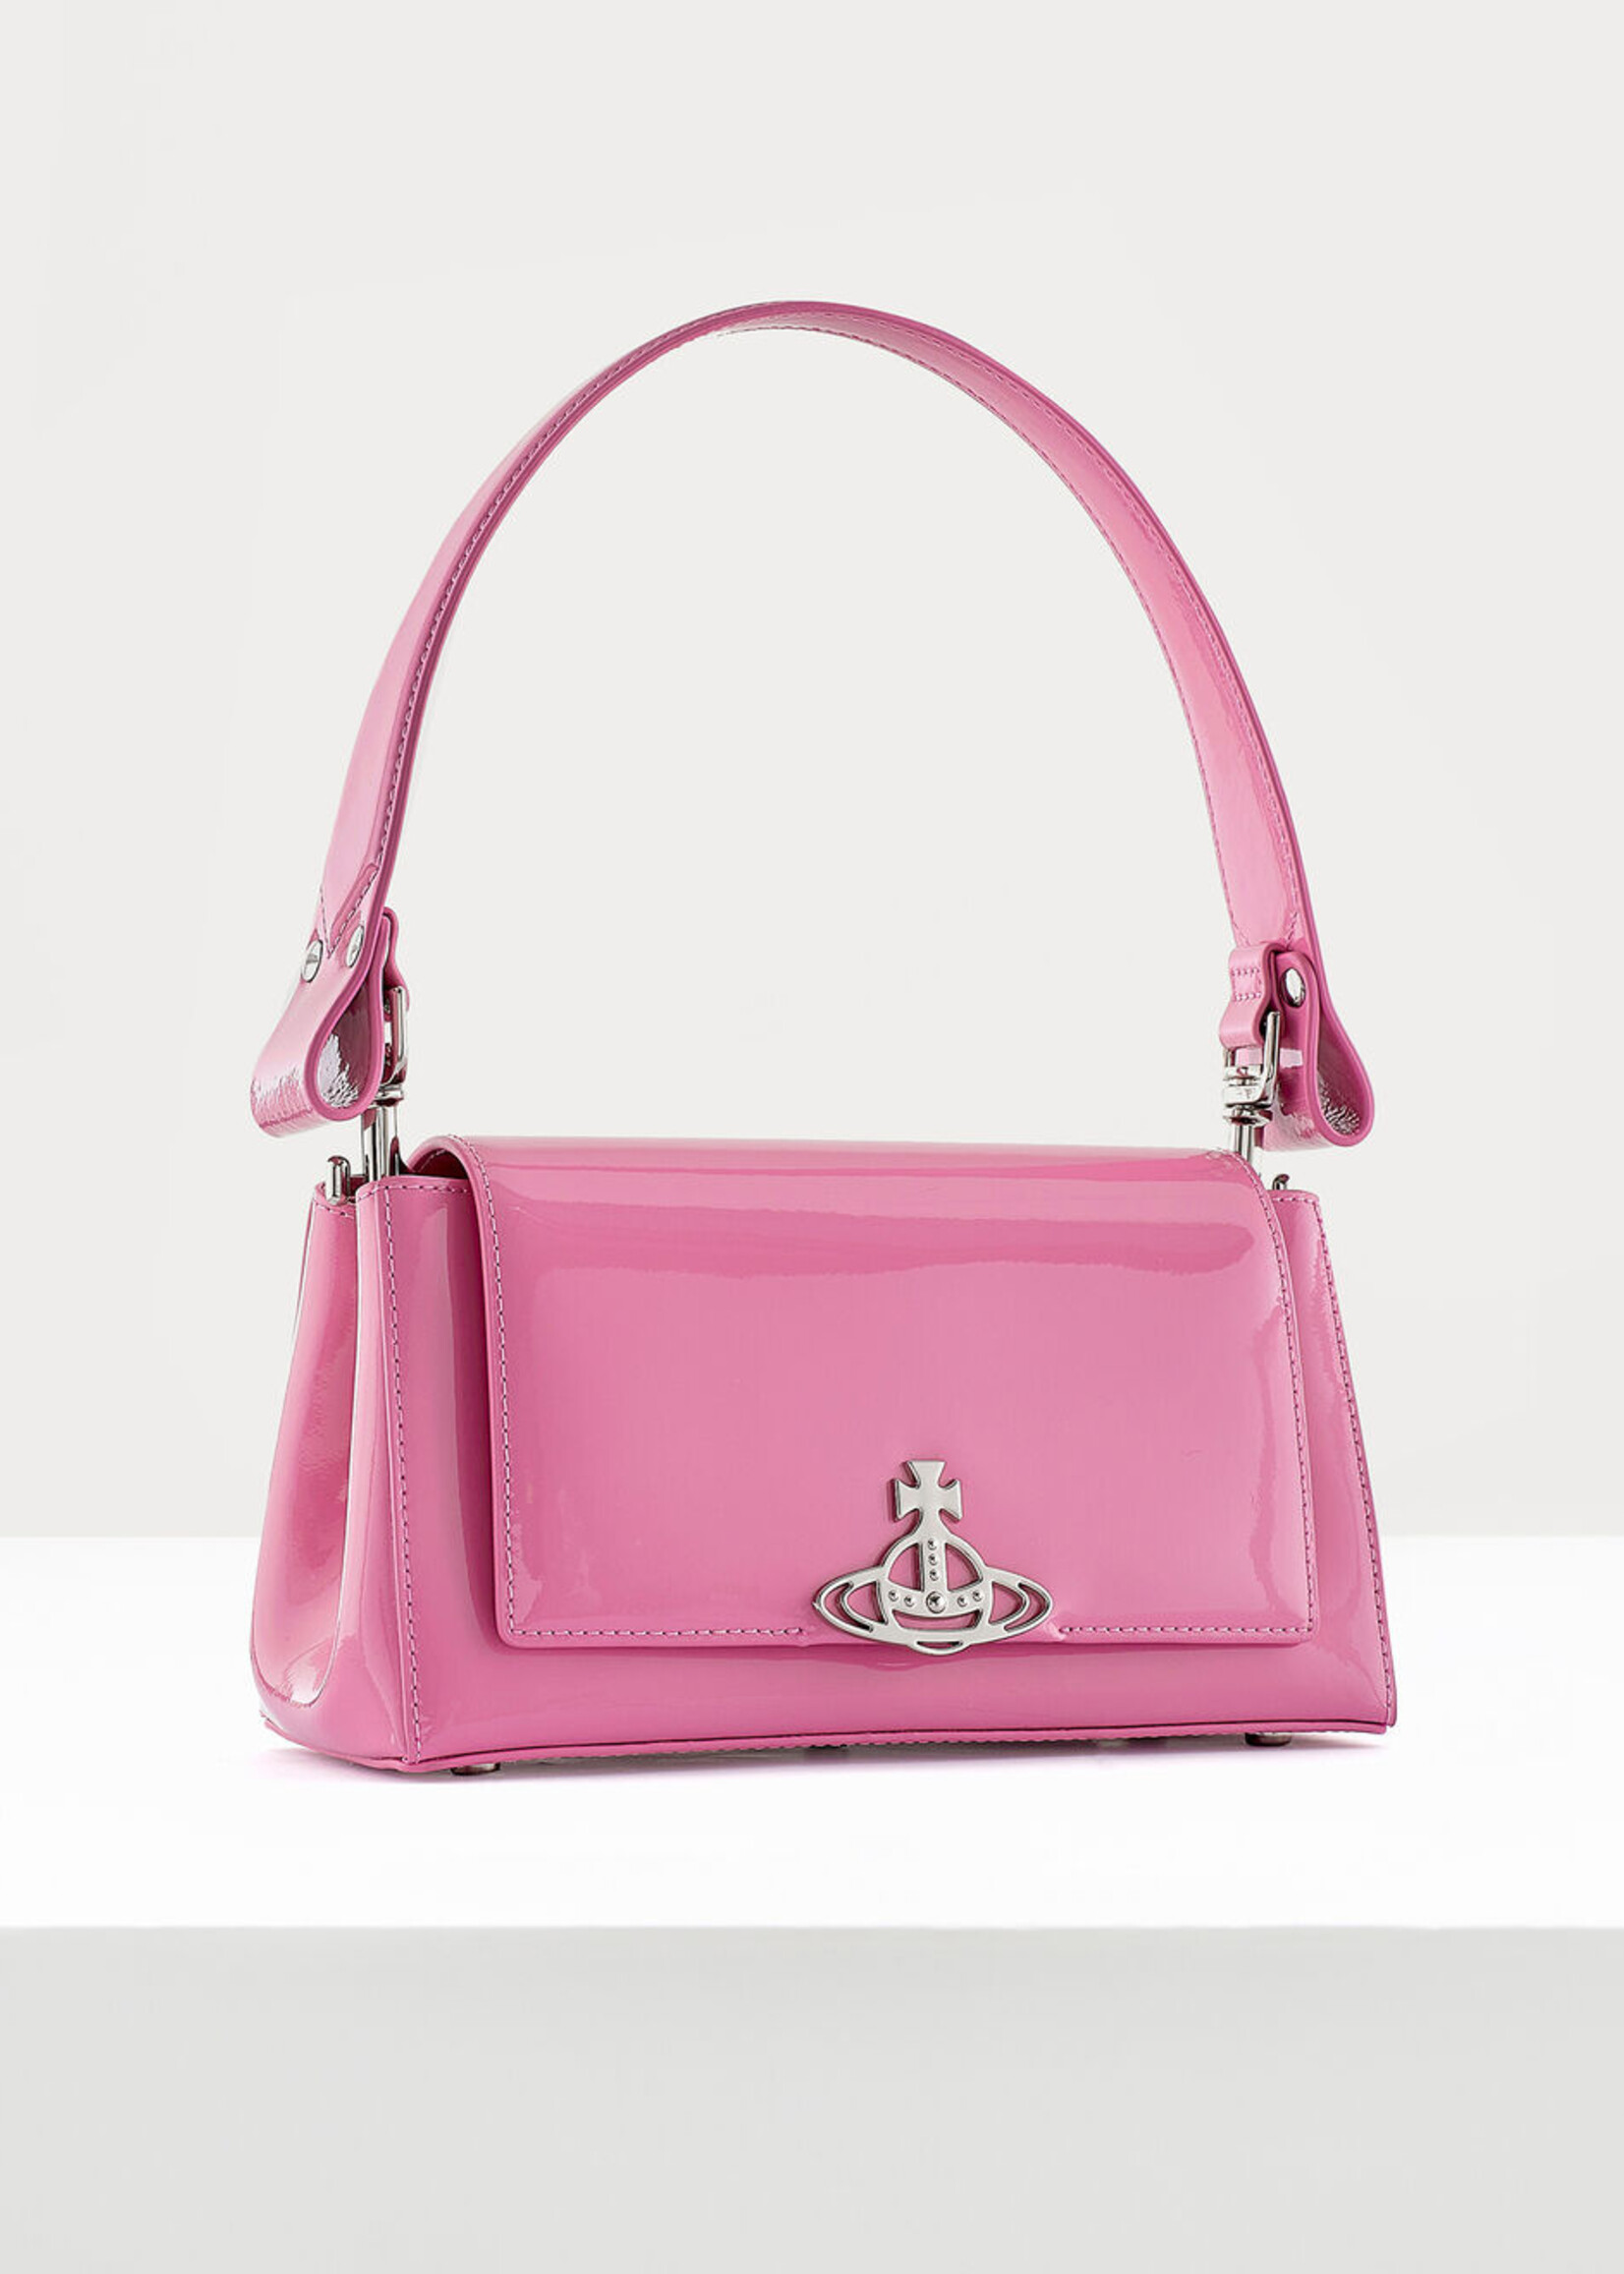 VIVIENNE WESTWOOD Hazel Medium Handbag in Pink Patent Leather